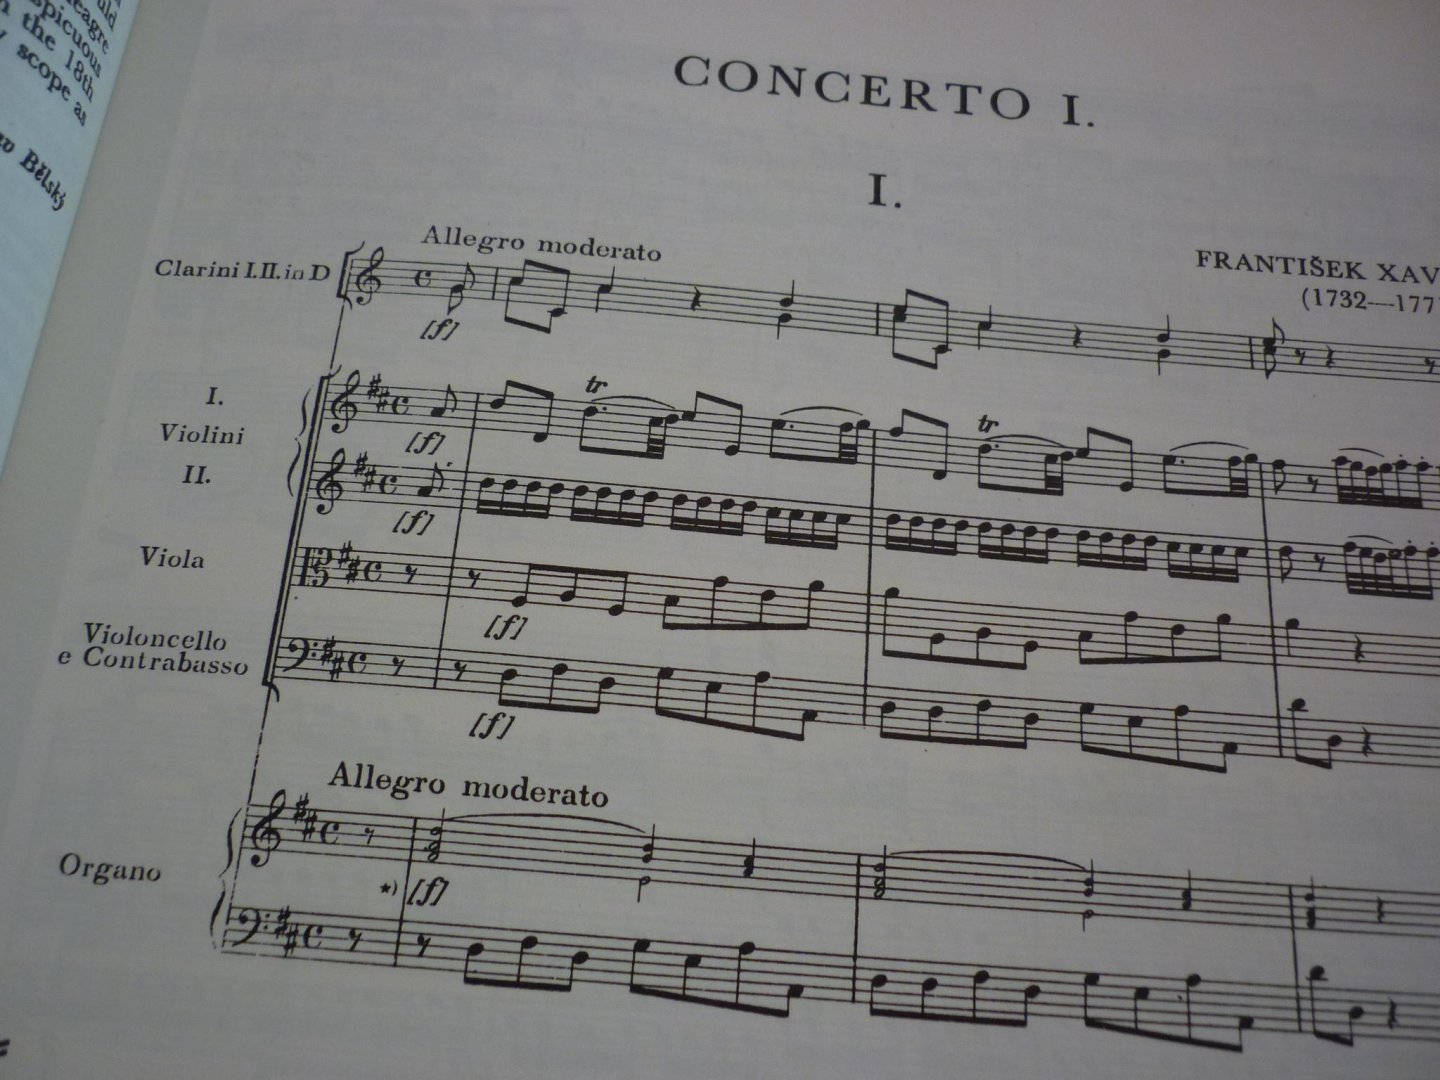 Brixi; Frantisek Xaver - Due Concerti per Organo (Musica Antiqua Bohemica - 75)